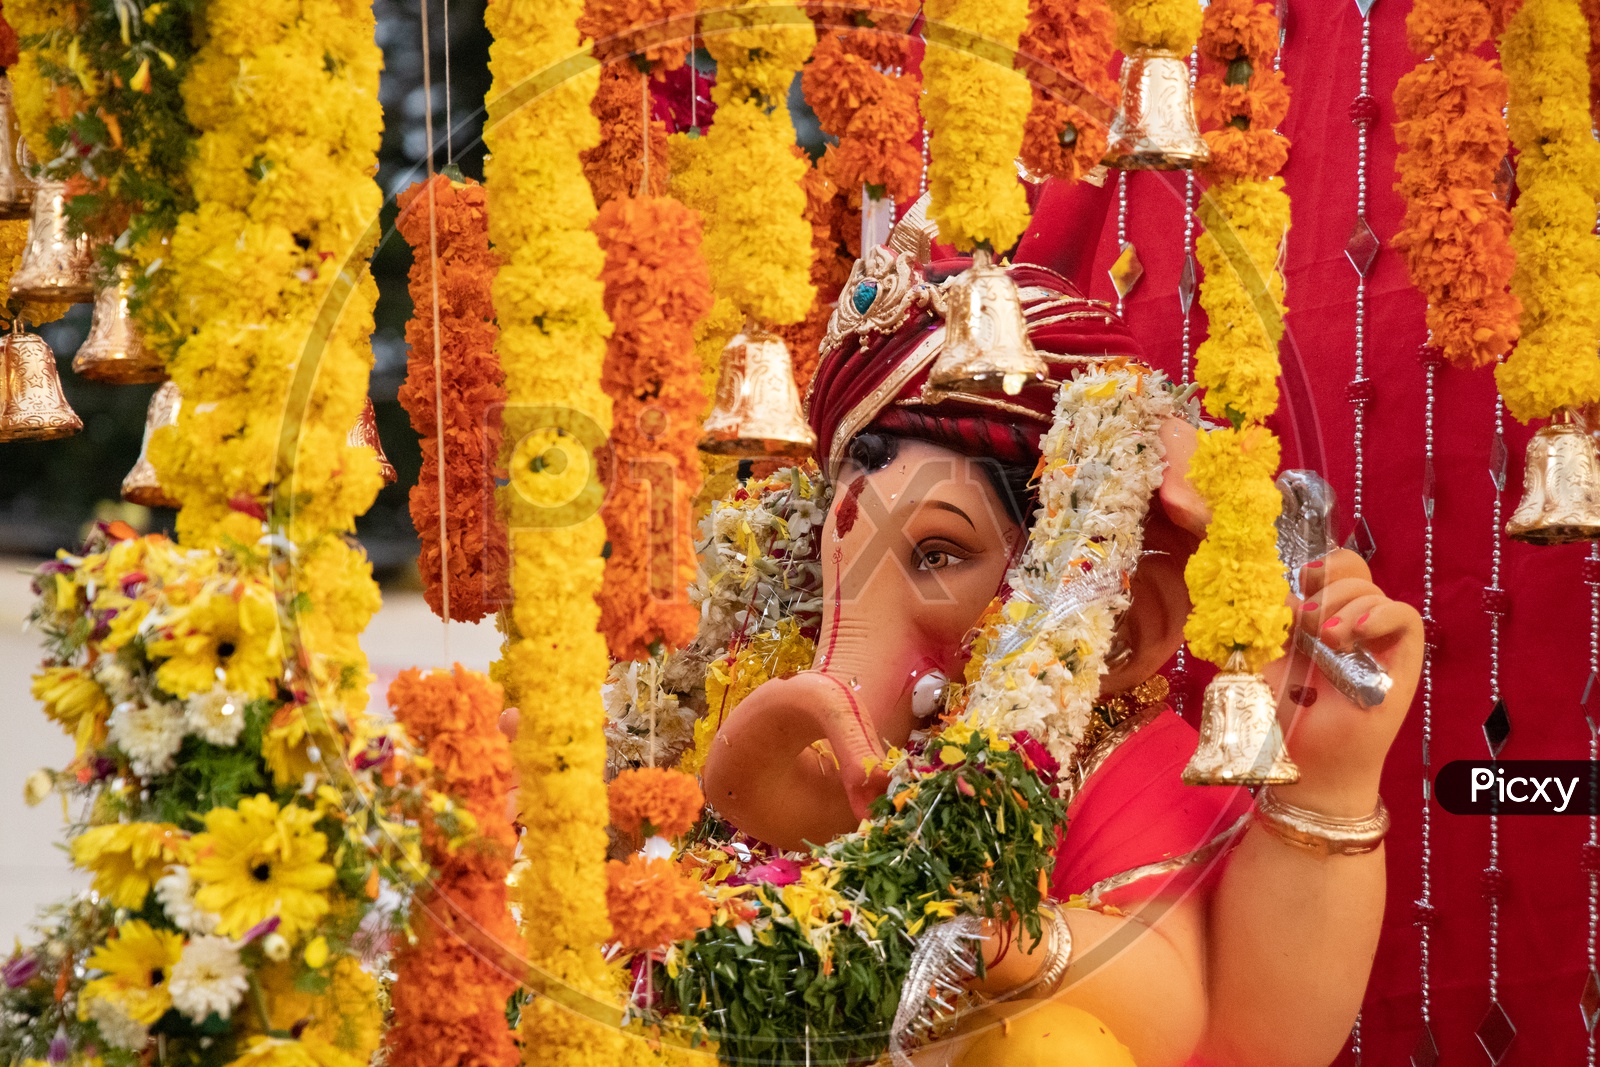 Lord Ganesh Idol In Procession During Ganesh Chaturdhi Event